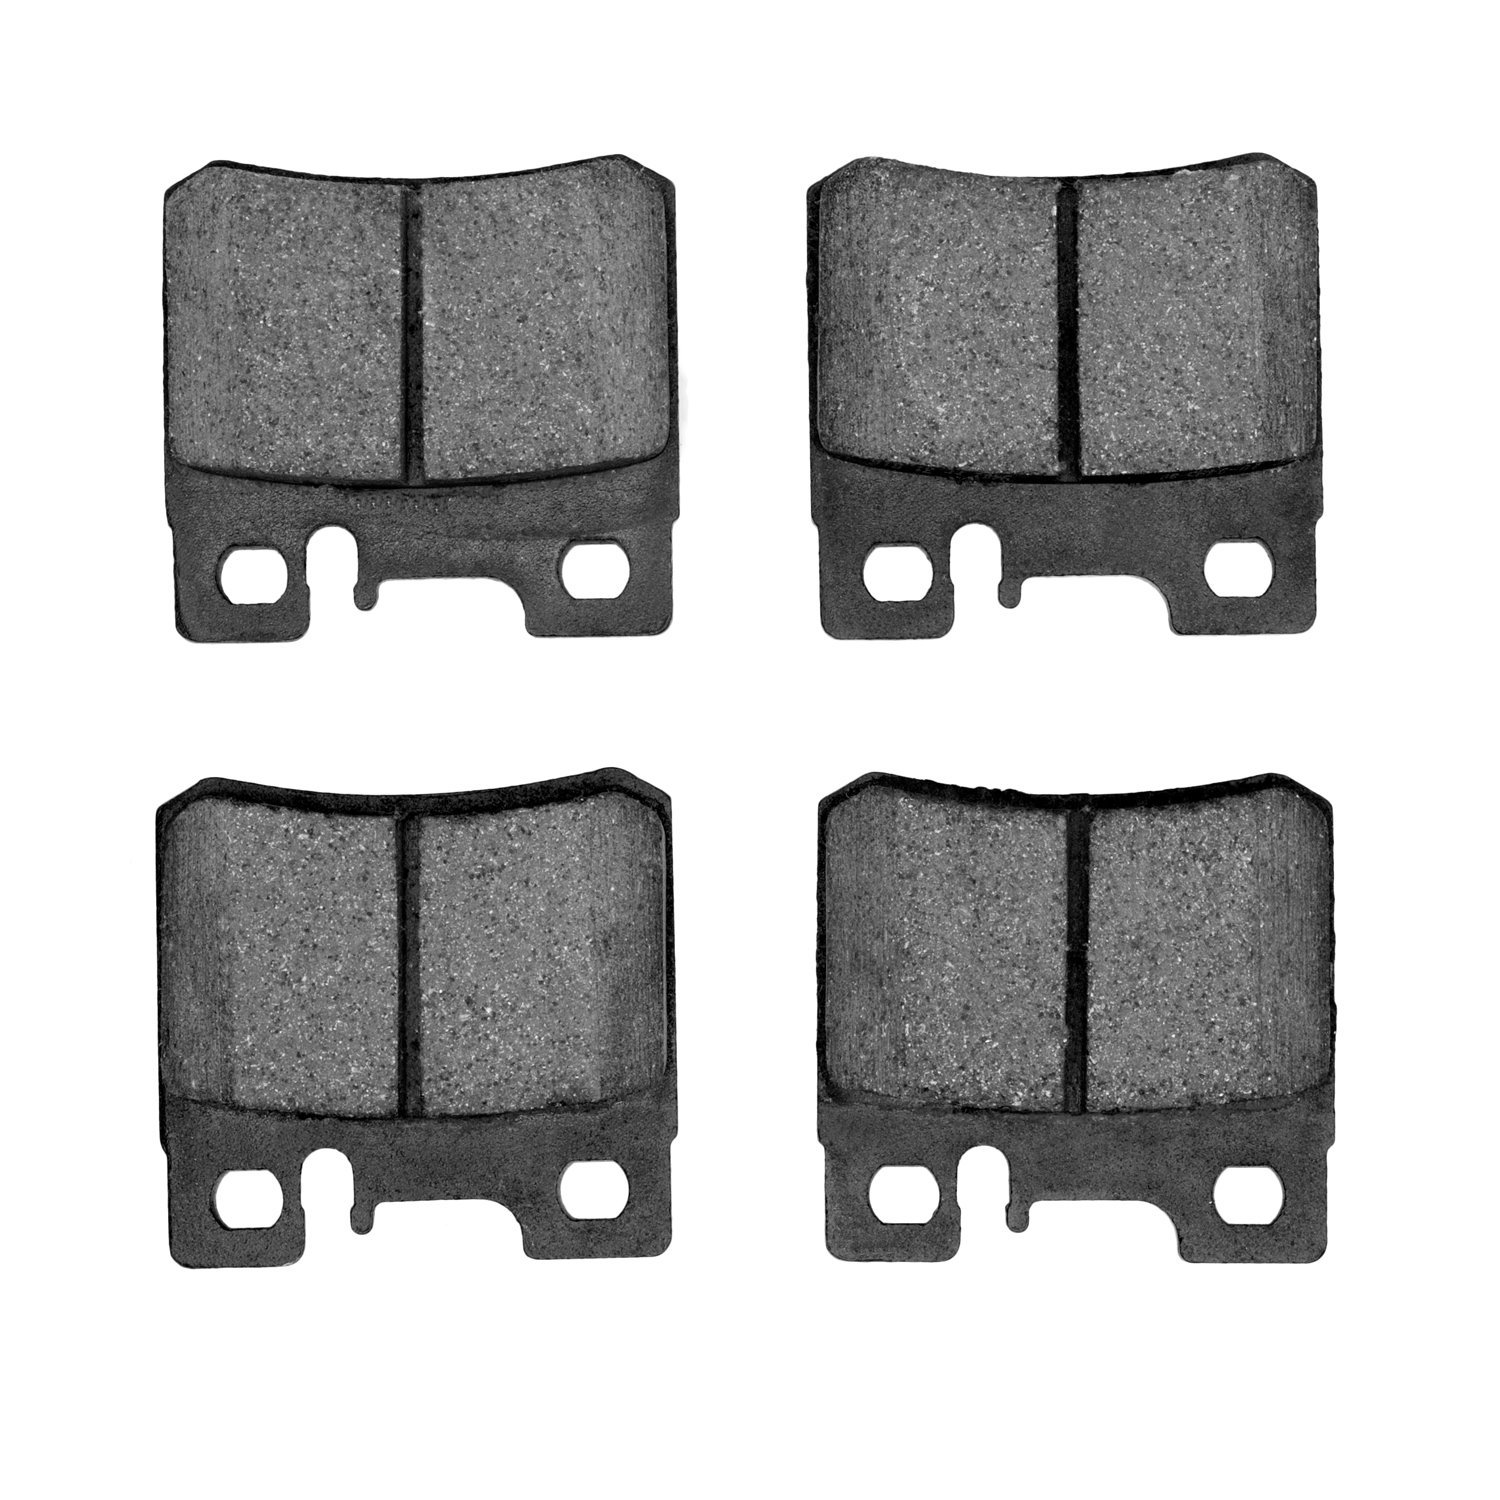 Ceramic Brake Pads, 1987-2000 Fits Multiple Makes/Models, Position: Rear